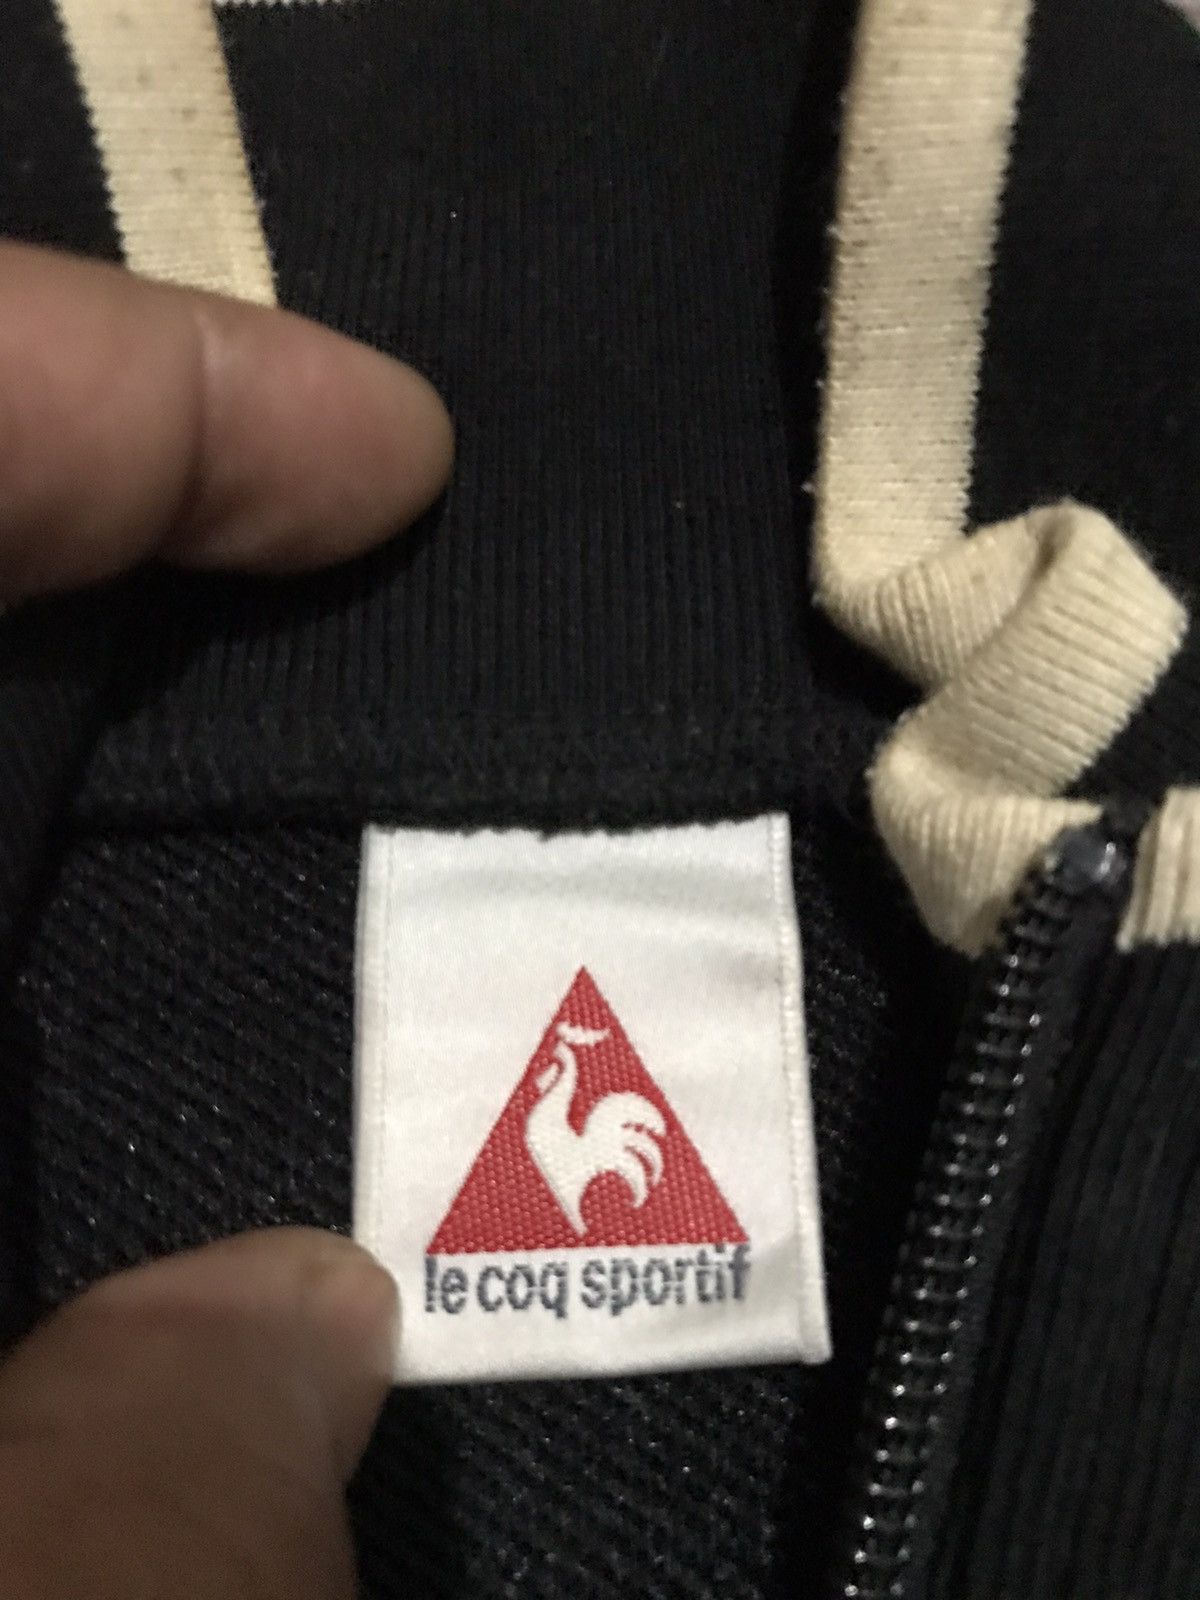 Le Coq Sportif - Lecoq Sportif Spellout Sweater Jacket -R9 - 4